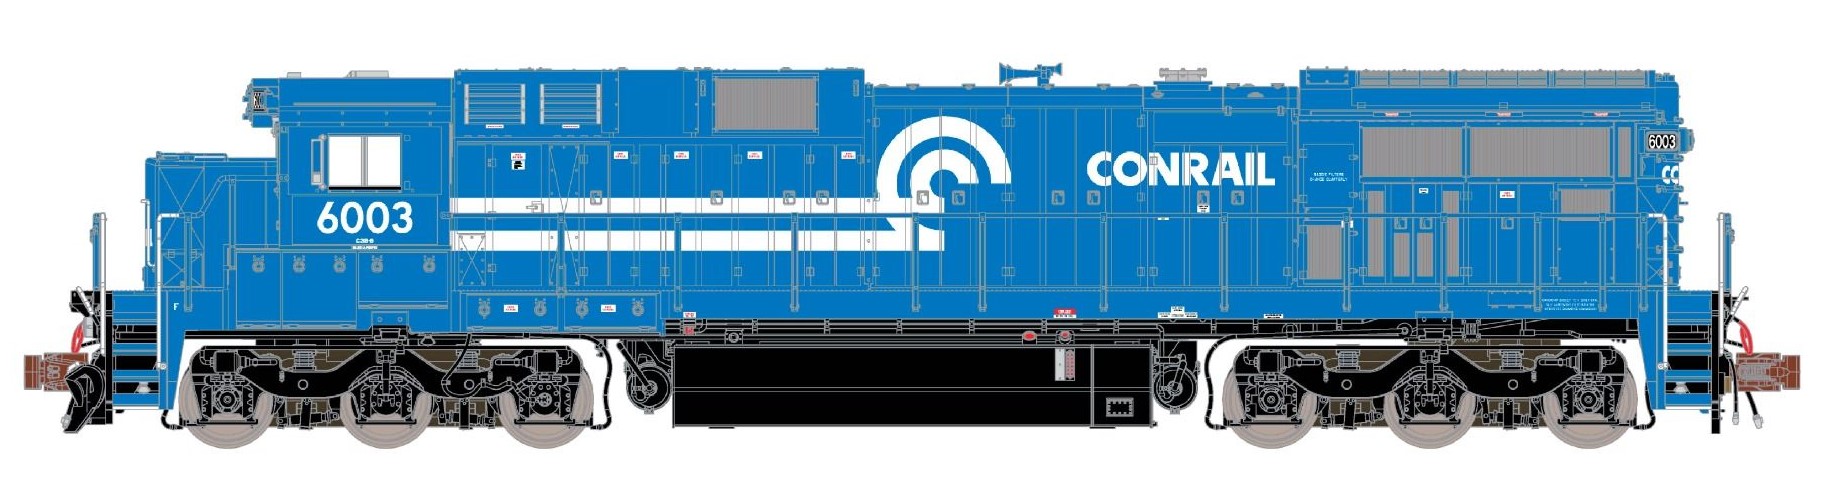 ScaleTrains Rivet Counter N SXT39182 DCC Ready GE C39-8 Locomotive Phase III Conrail w/Ditch Lights CR #6003